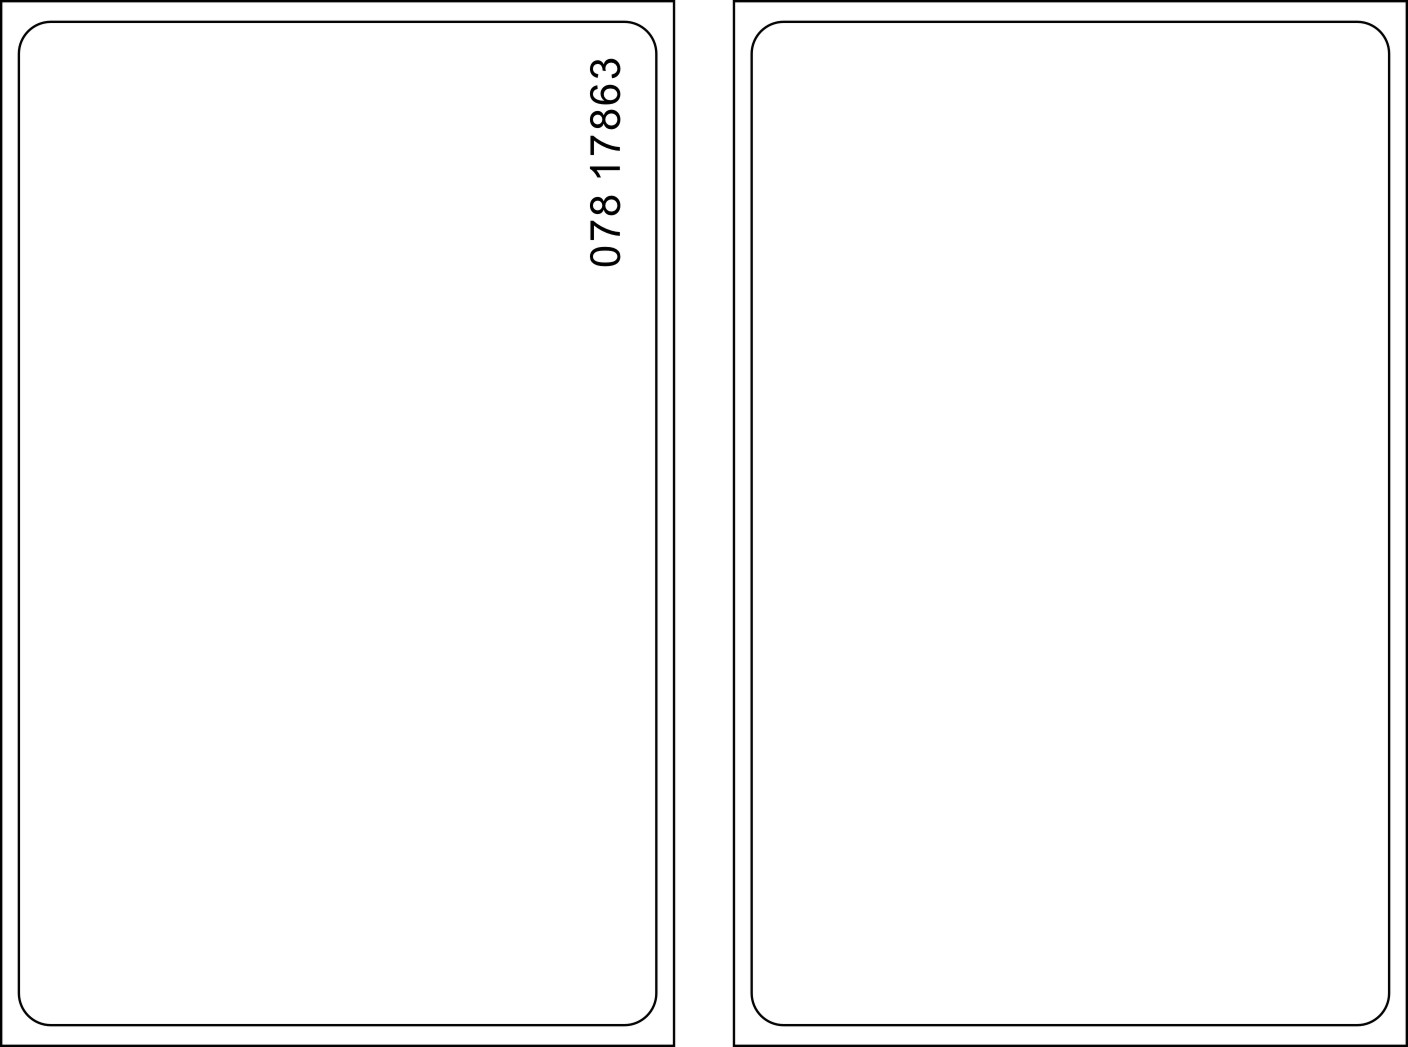 LIONBEAM | Prox Card Printable
125khz 50P